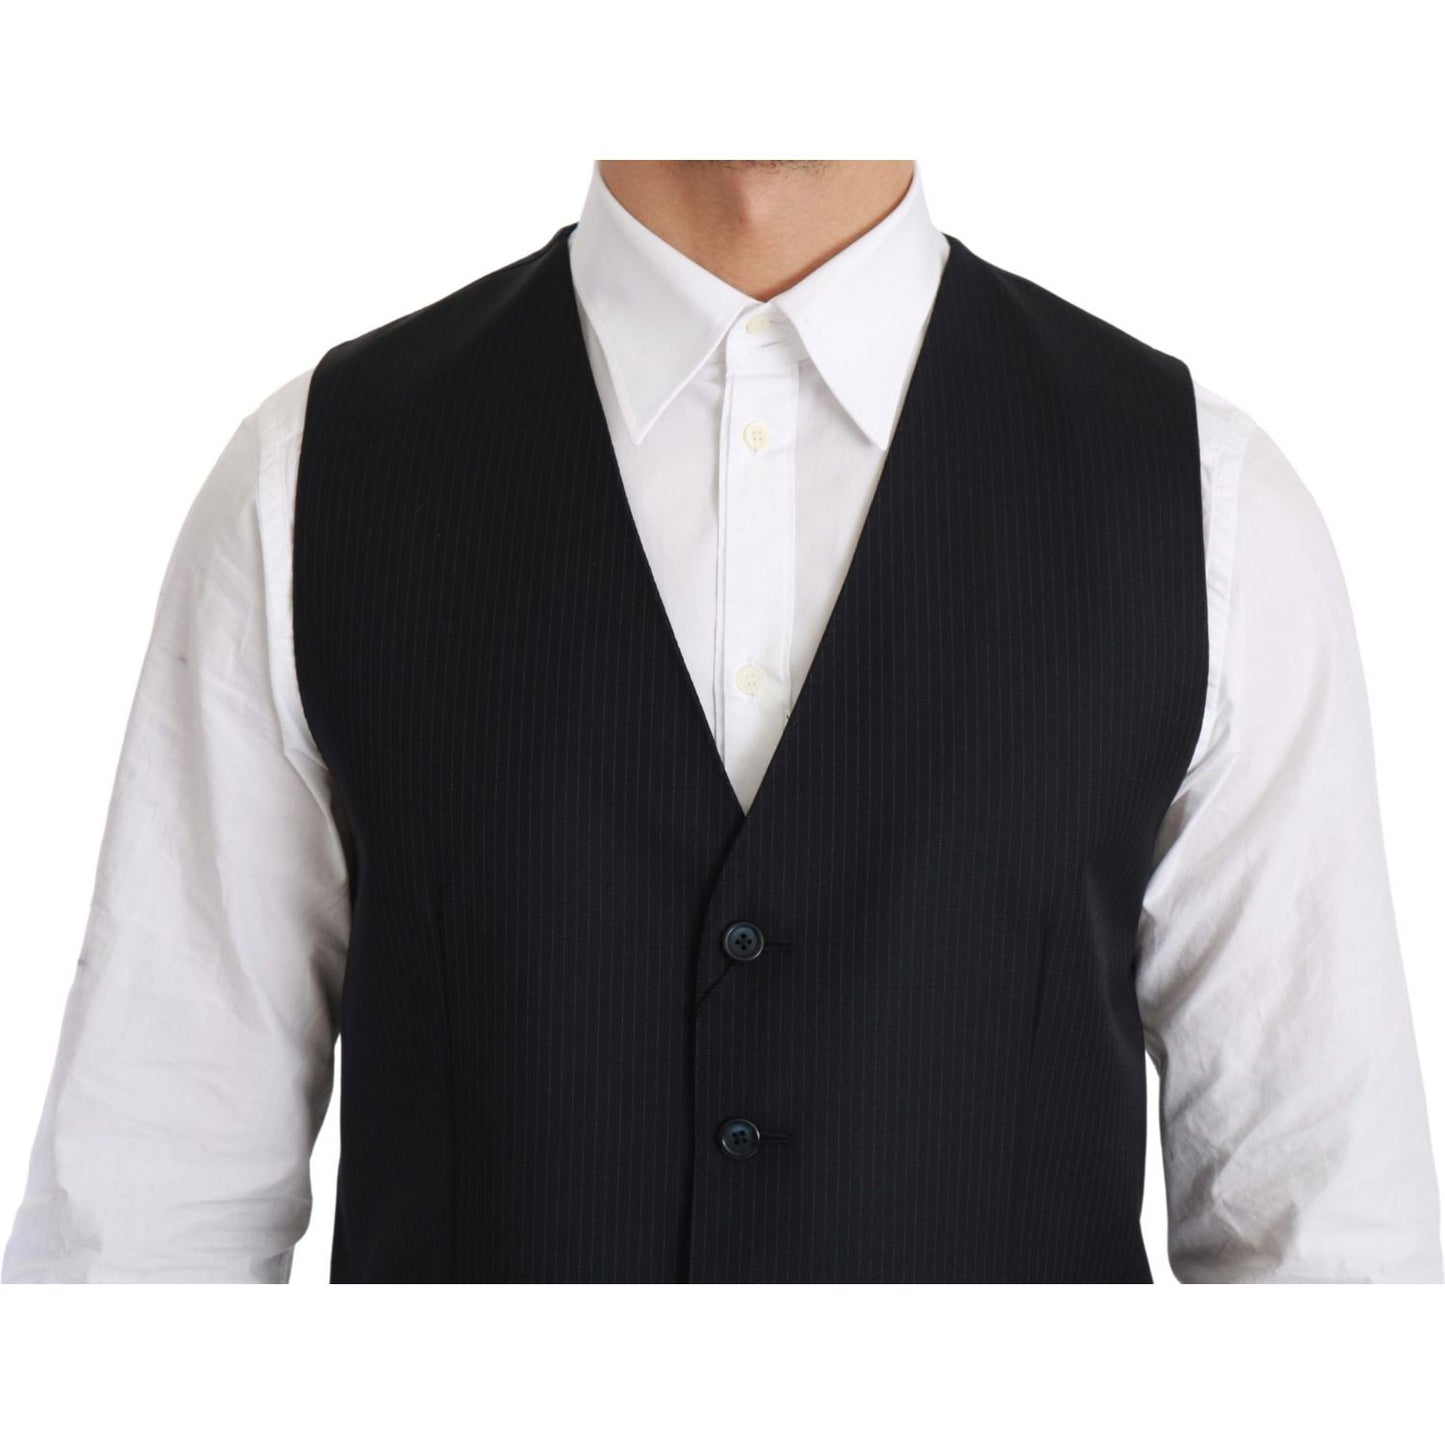 Dolce & Gabbana Elegant Blue Striped Dress Vest blue-waistcoat-formal-stretch-wool-vest IMG_0251-scaled-2435498a-cf9.jpg